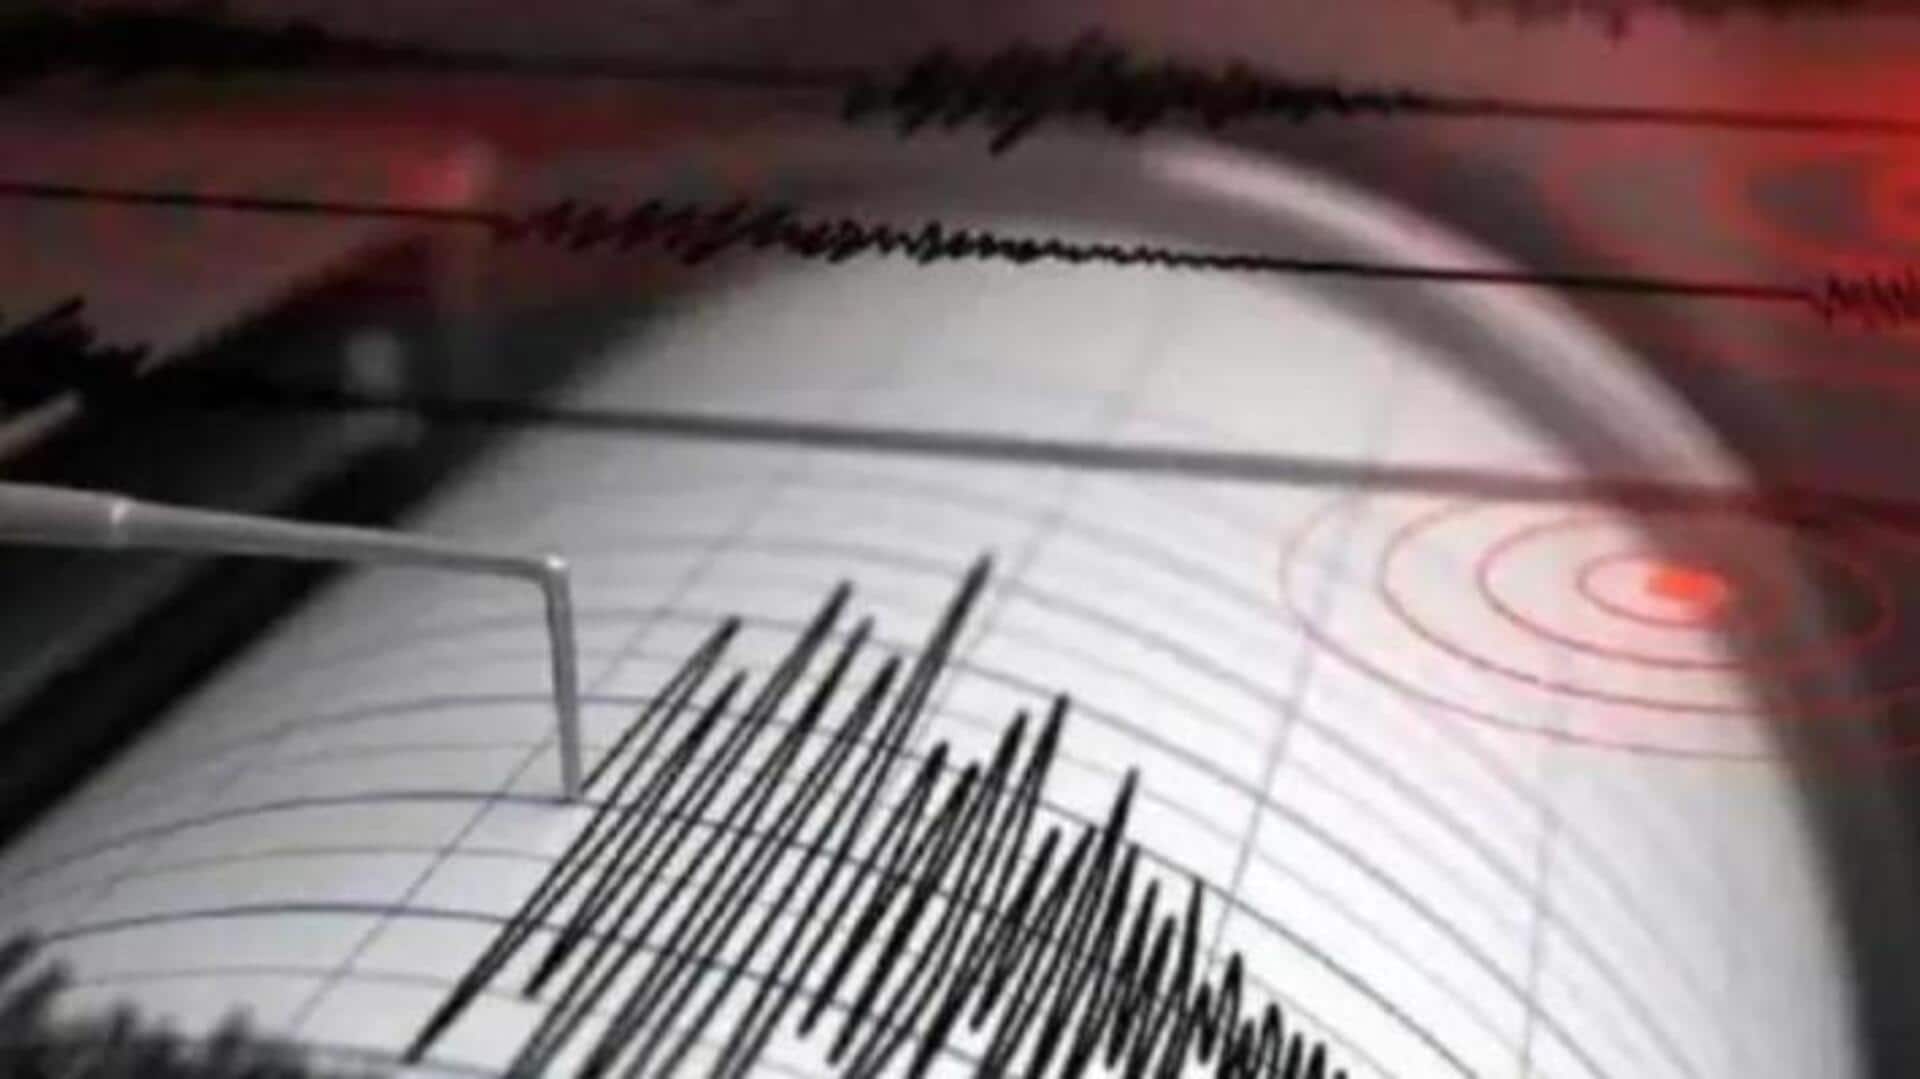 2.6-magnitude earthquake hits Delhi-NCR